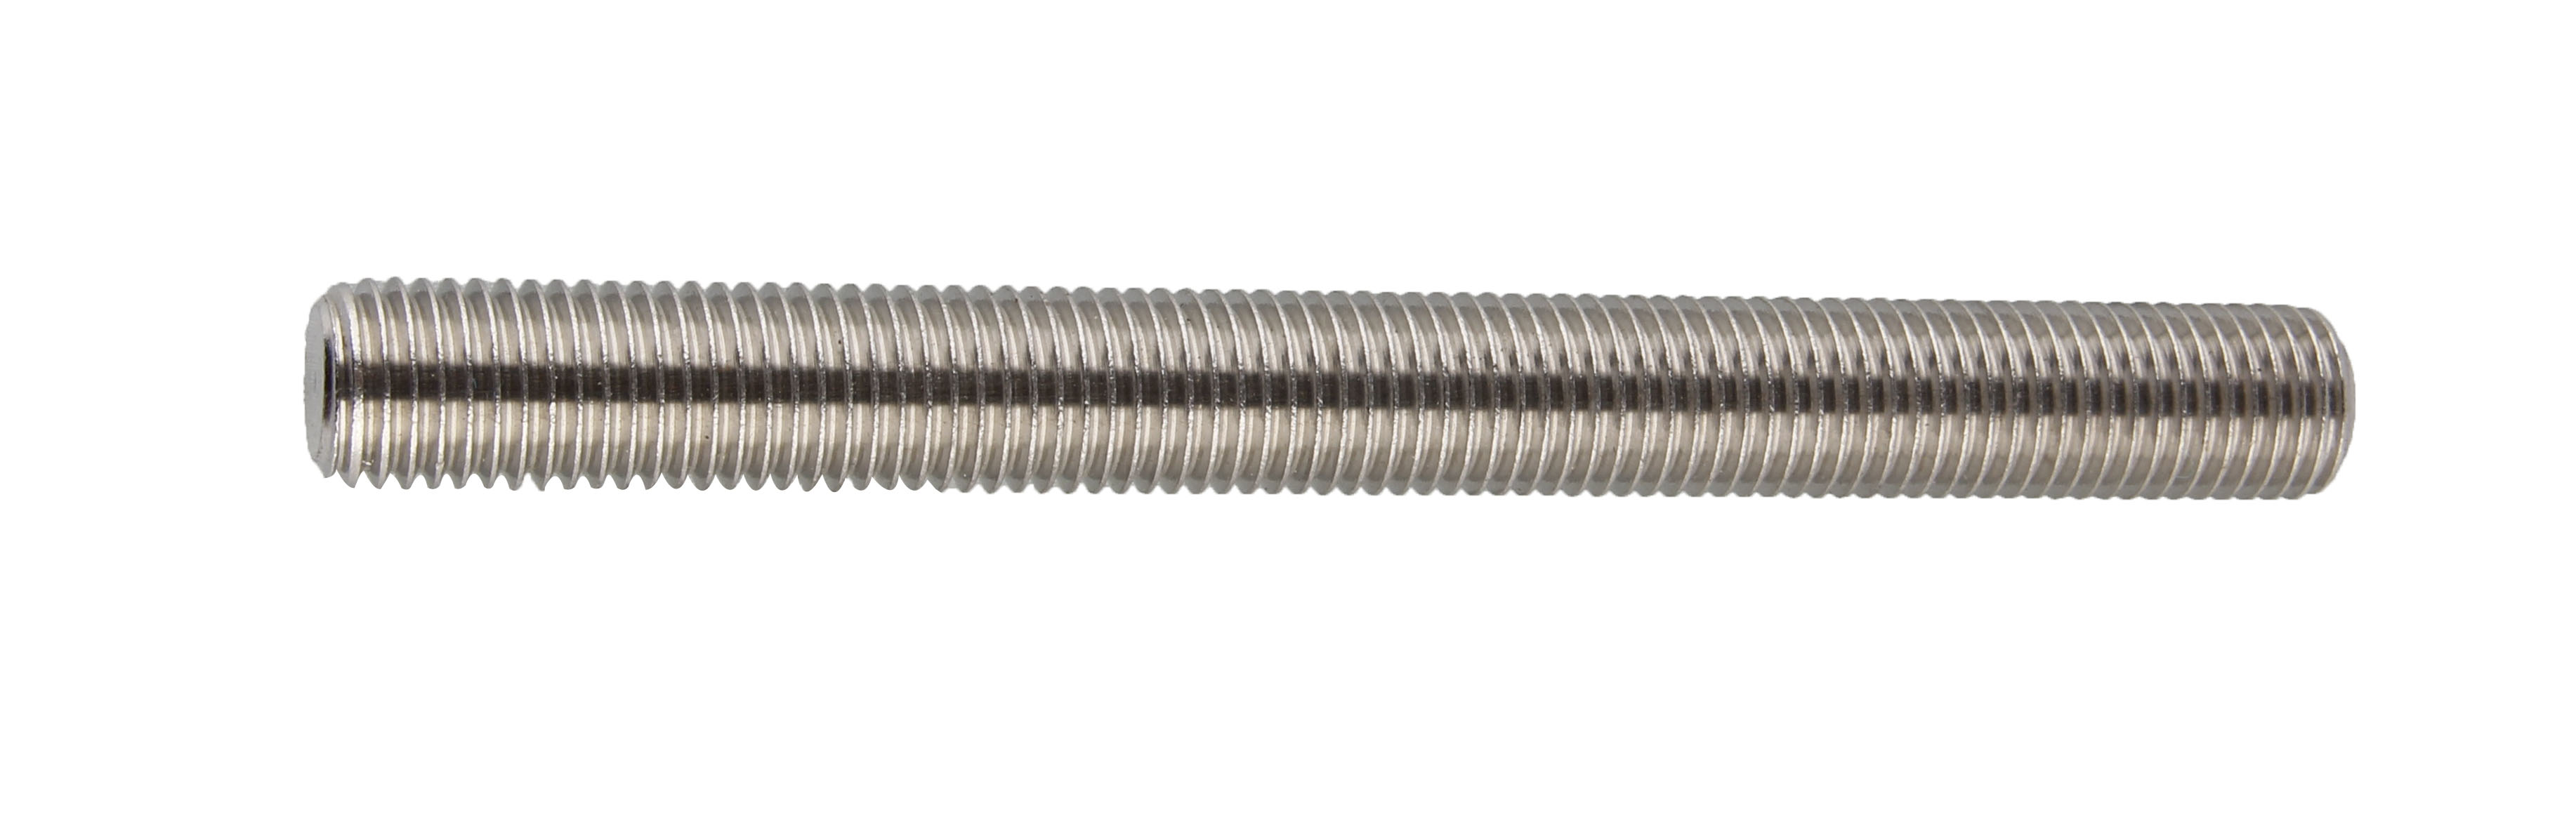 Stainless Steel DIN975 Thread Rod